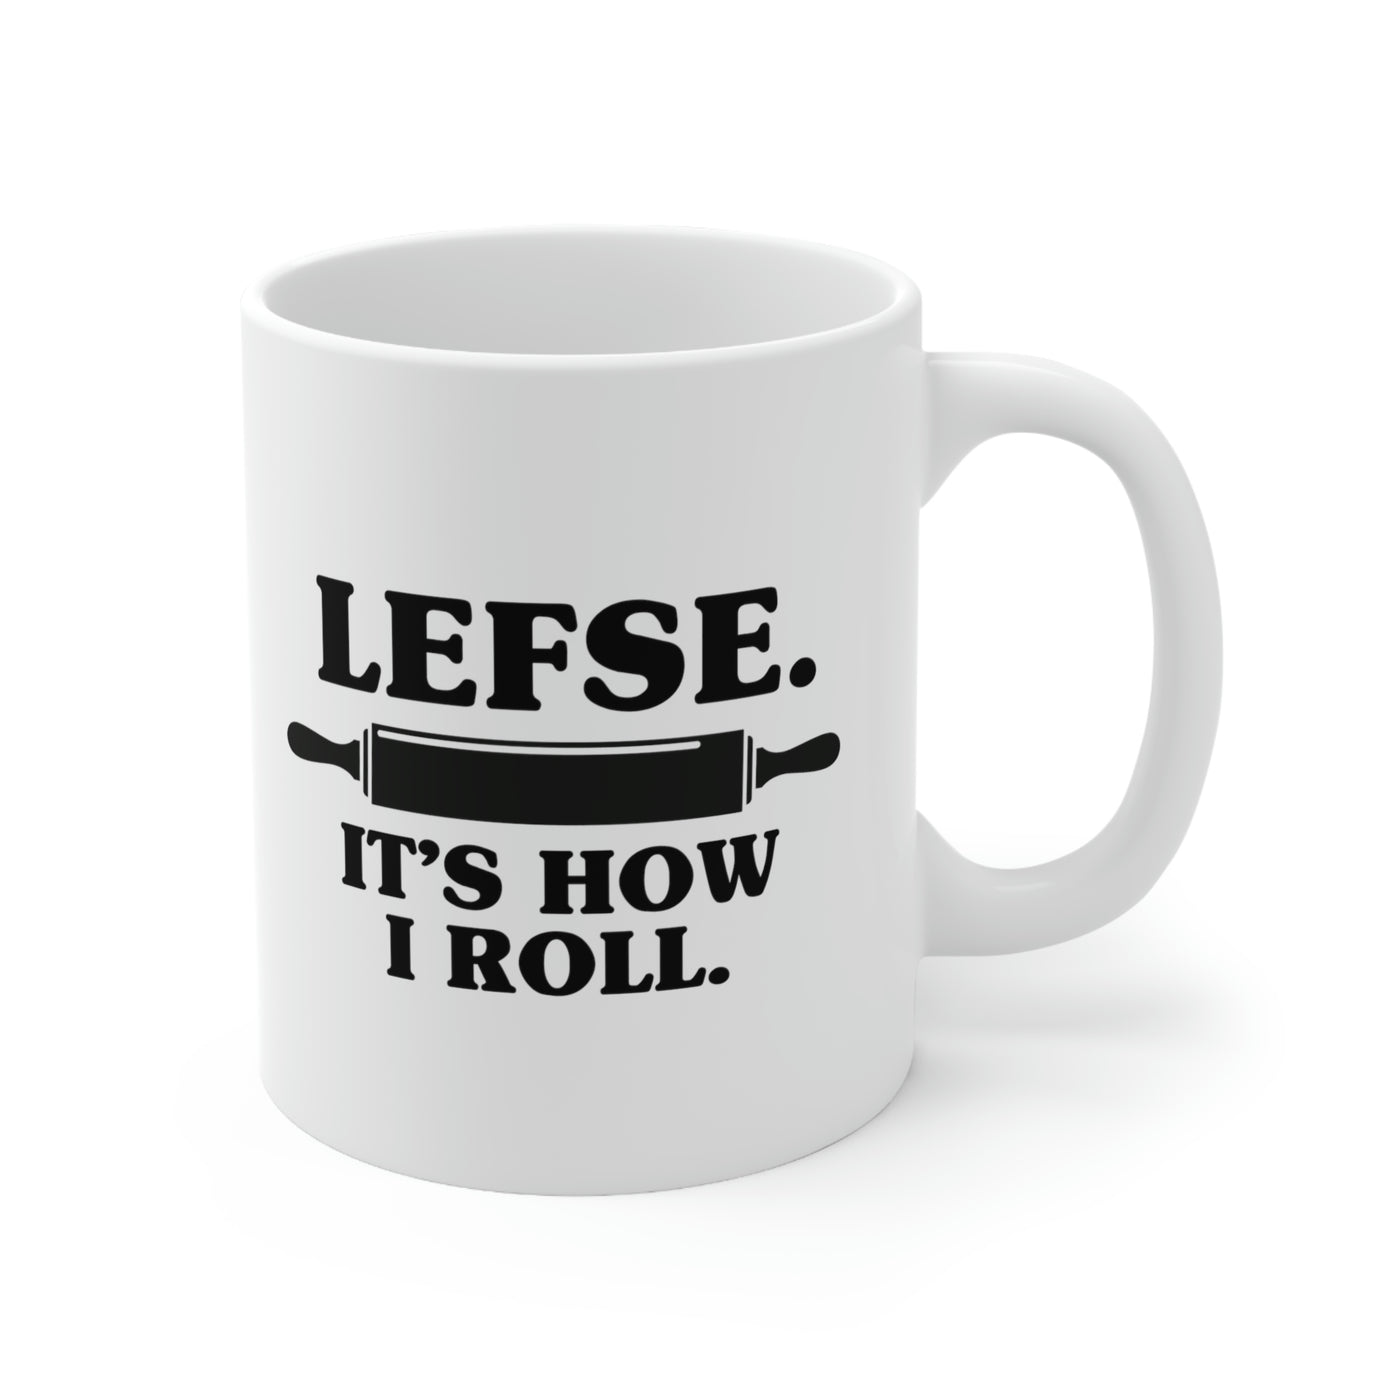 Lefse It's How I Roll Mug Scandinavian Design Studio